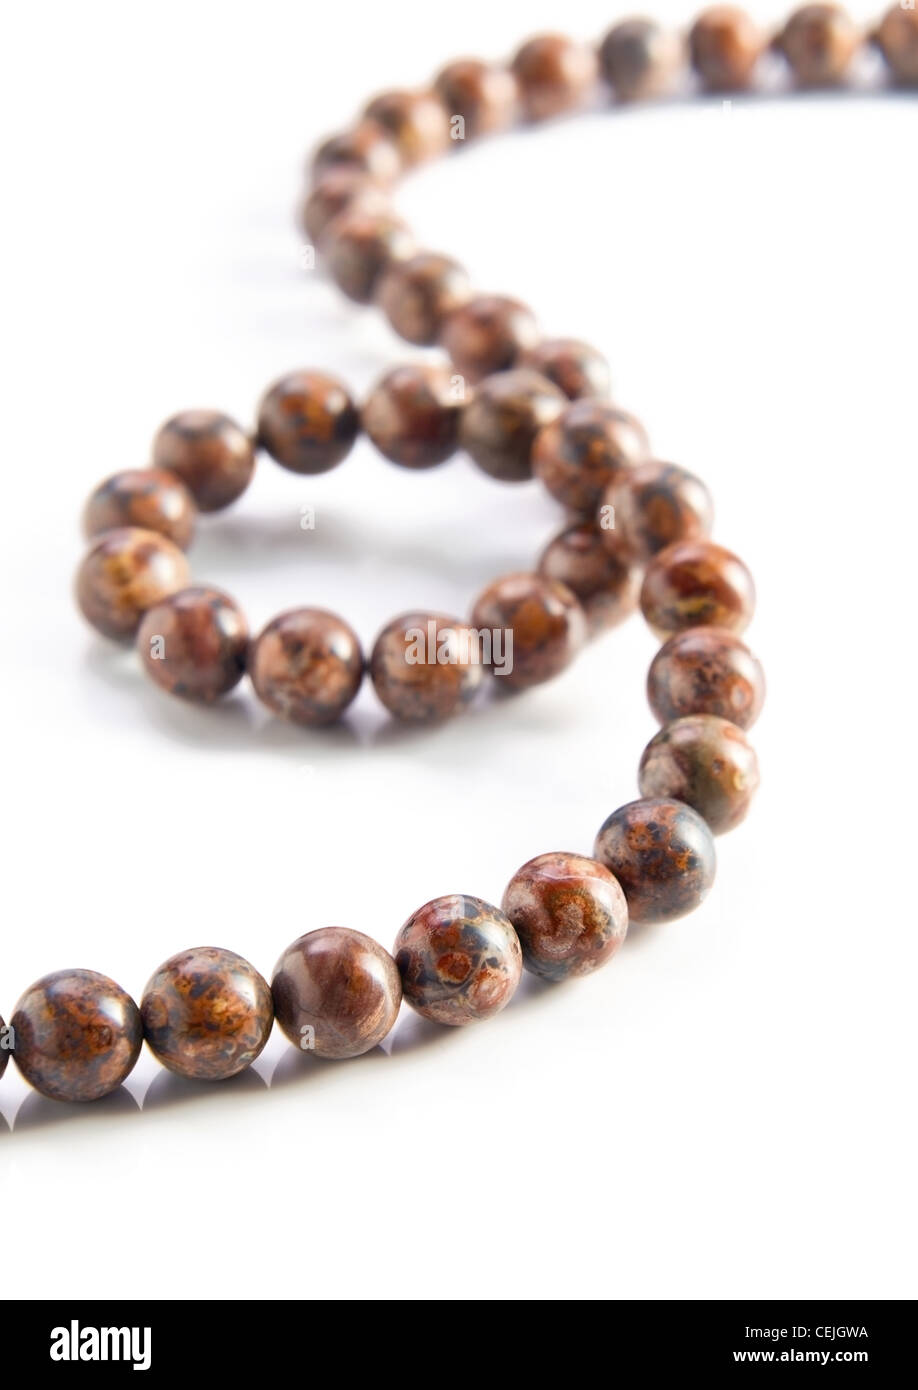 Leopard skin jasper gemstone beads on a white reflective background. Stock Photo